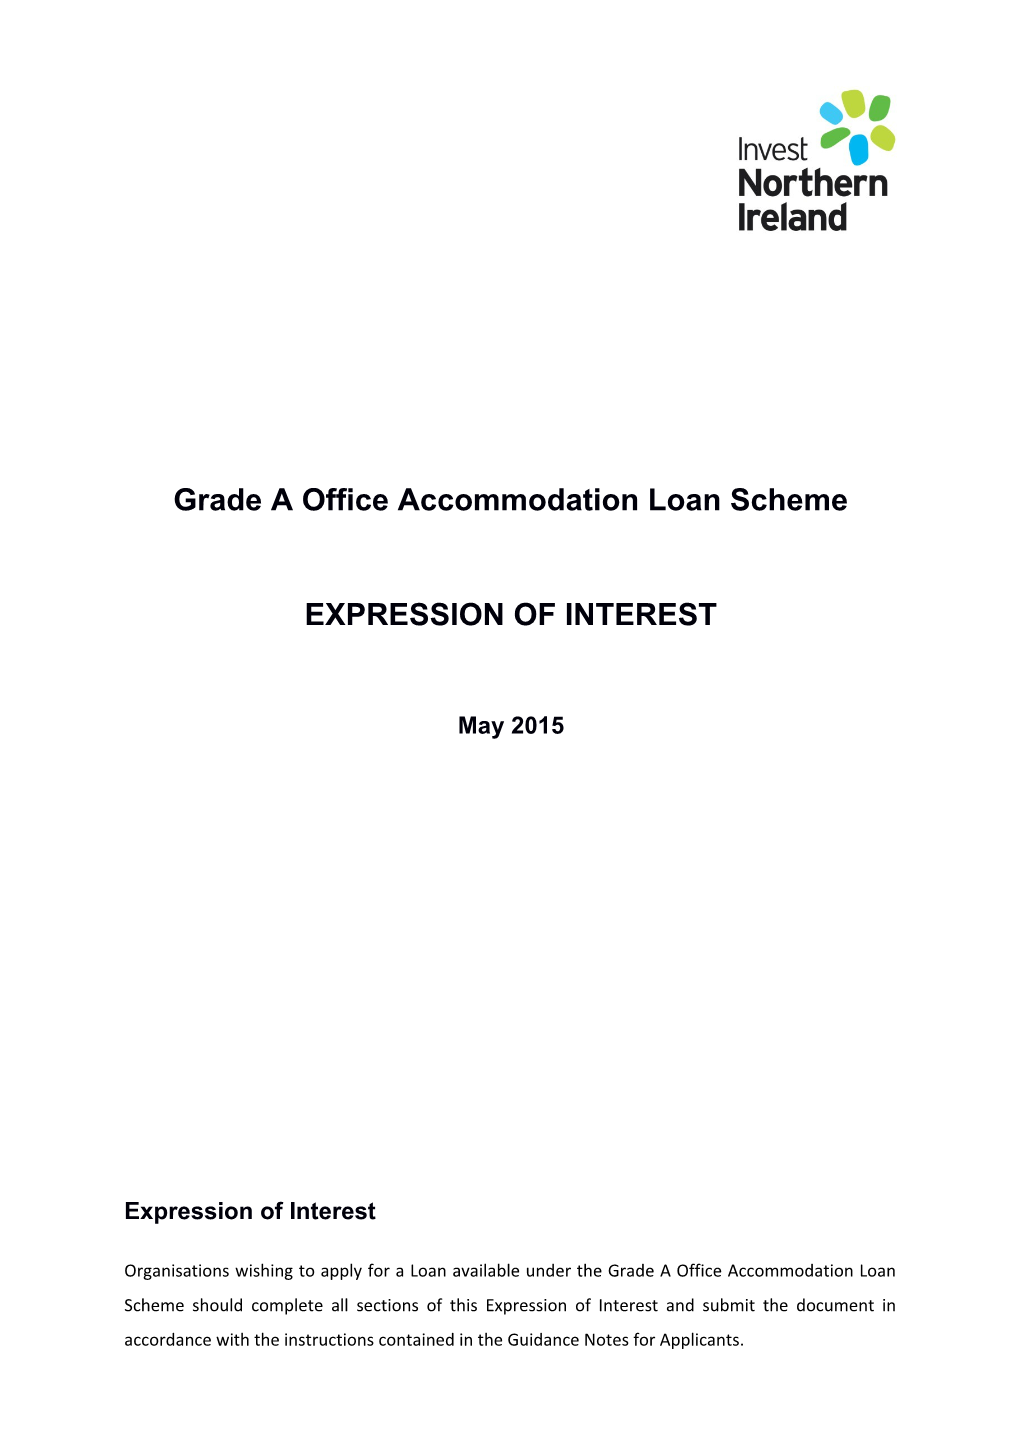 Grade a Office Accomodation Loan Scheme Expression of Interest (DOC)